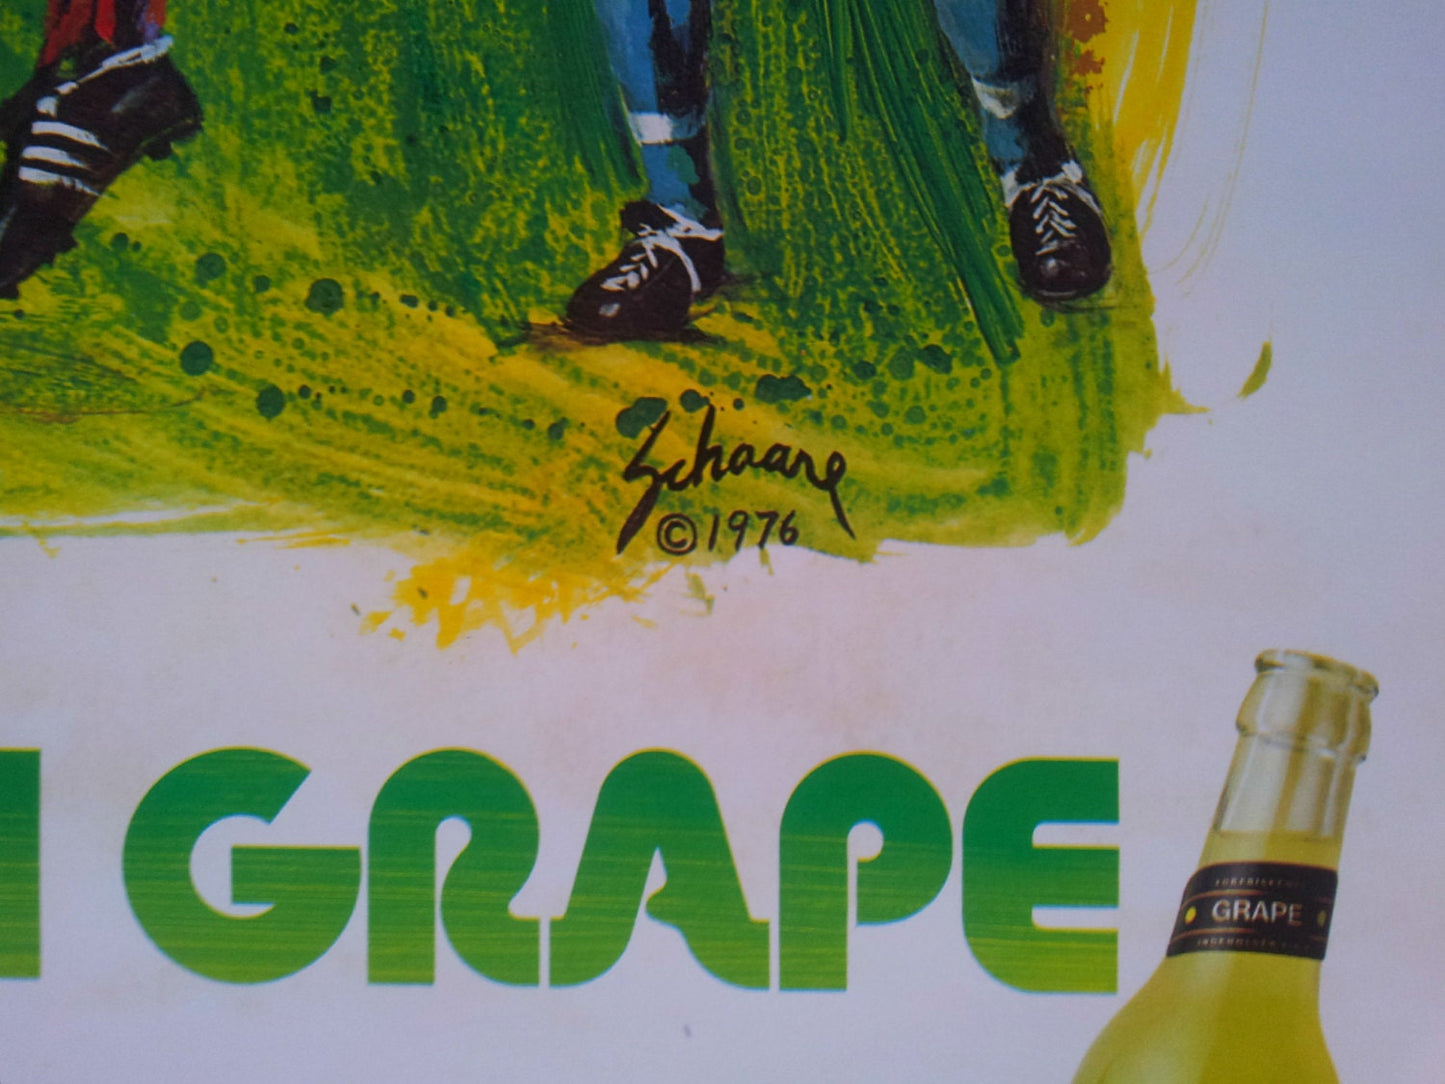 1976 Carlsberg Grape (Football/Soccer) - Original Vintage Poster